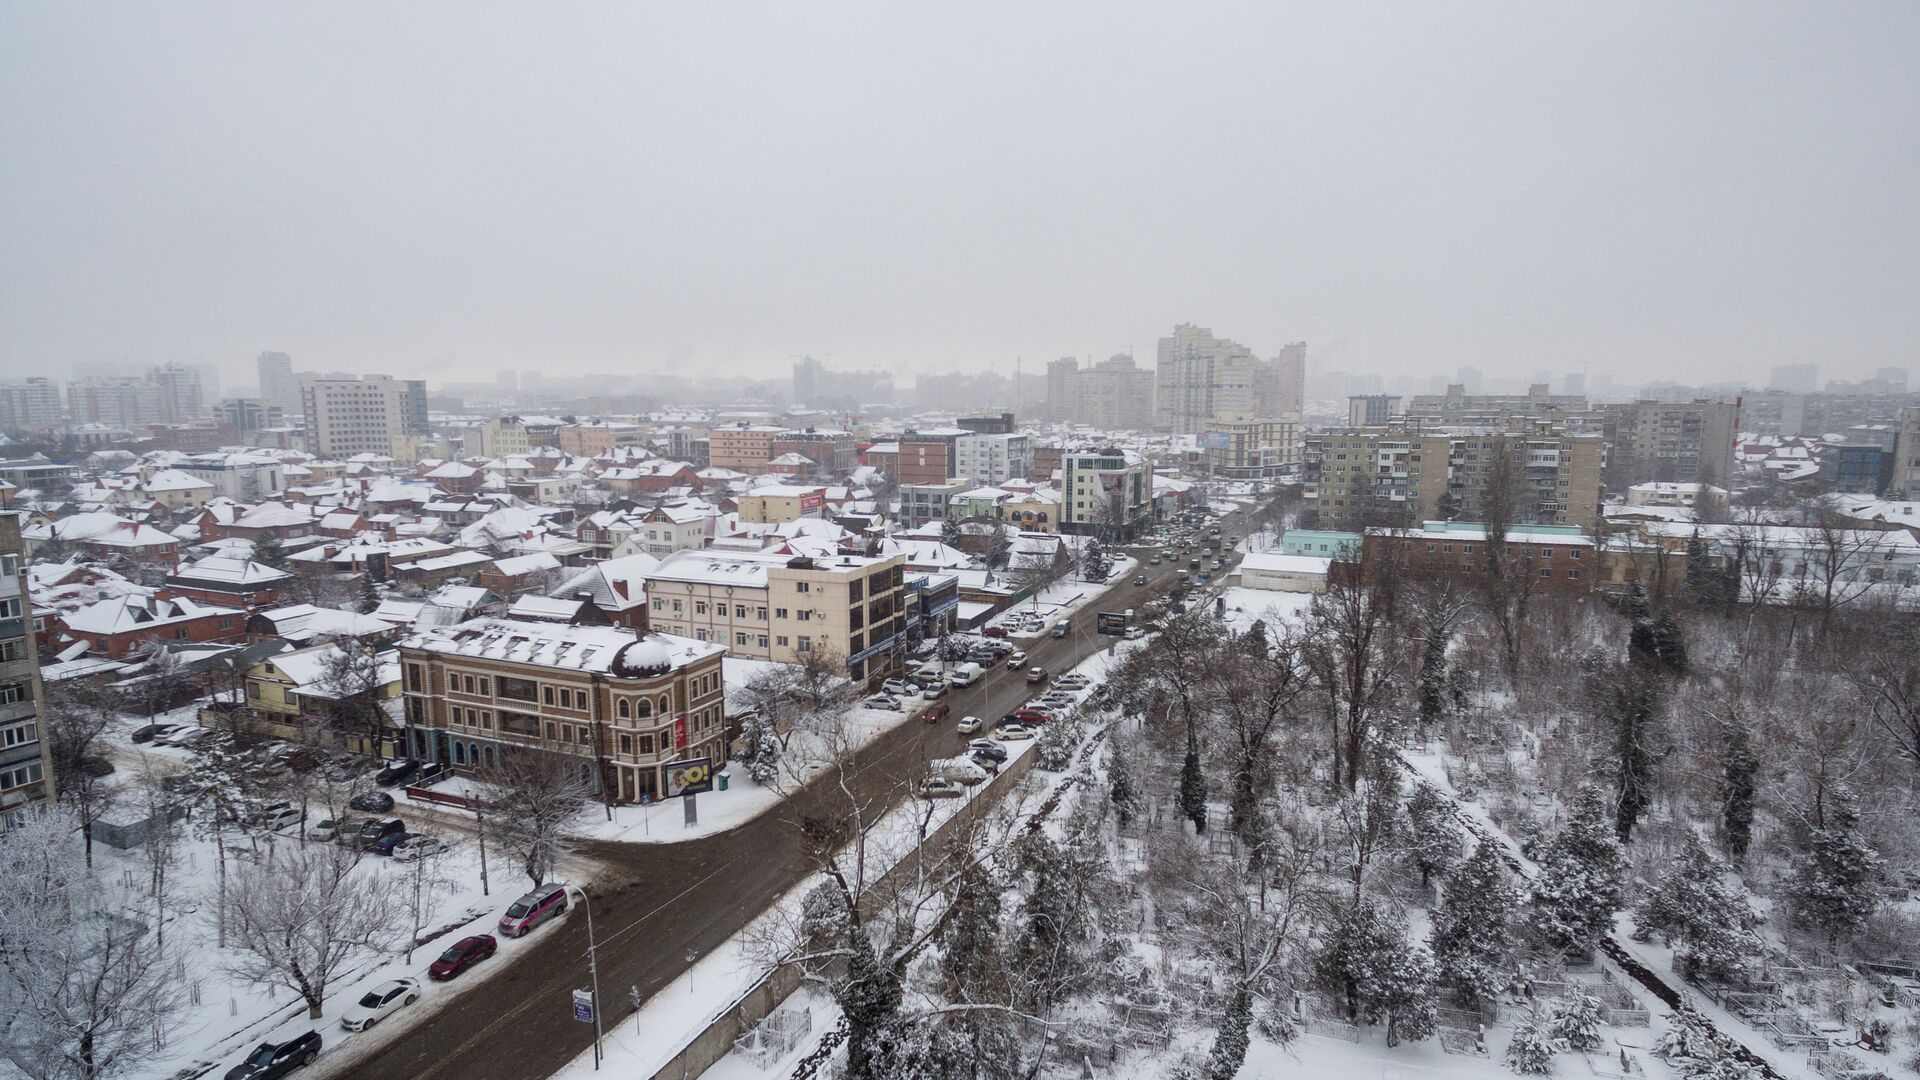 Город Краснодар Фото 2022